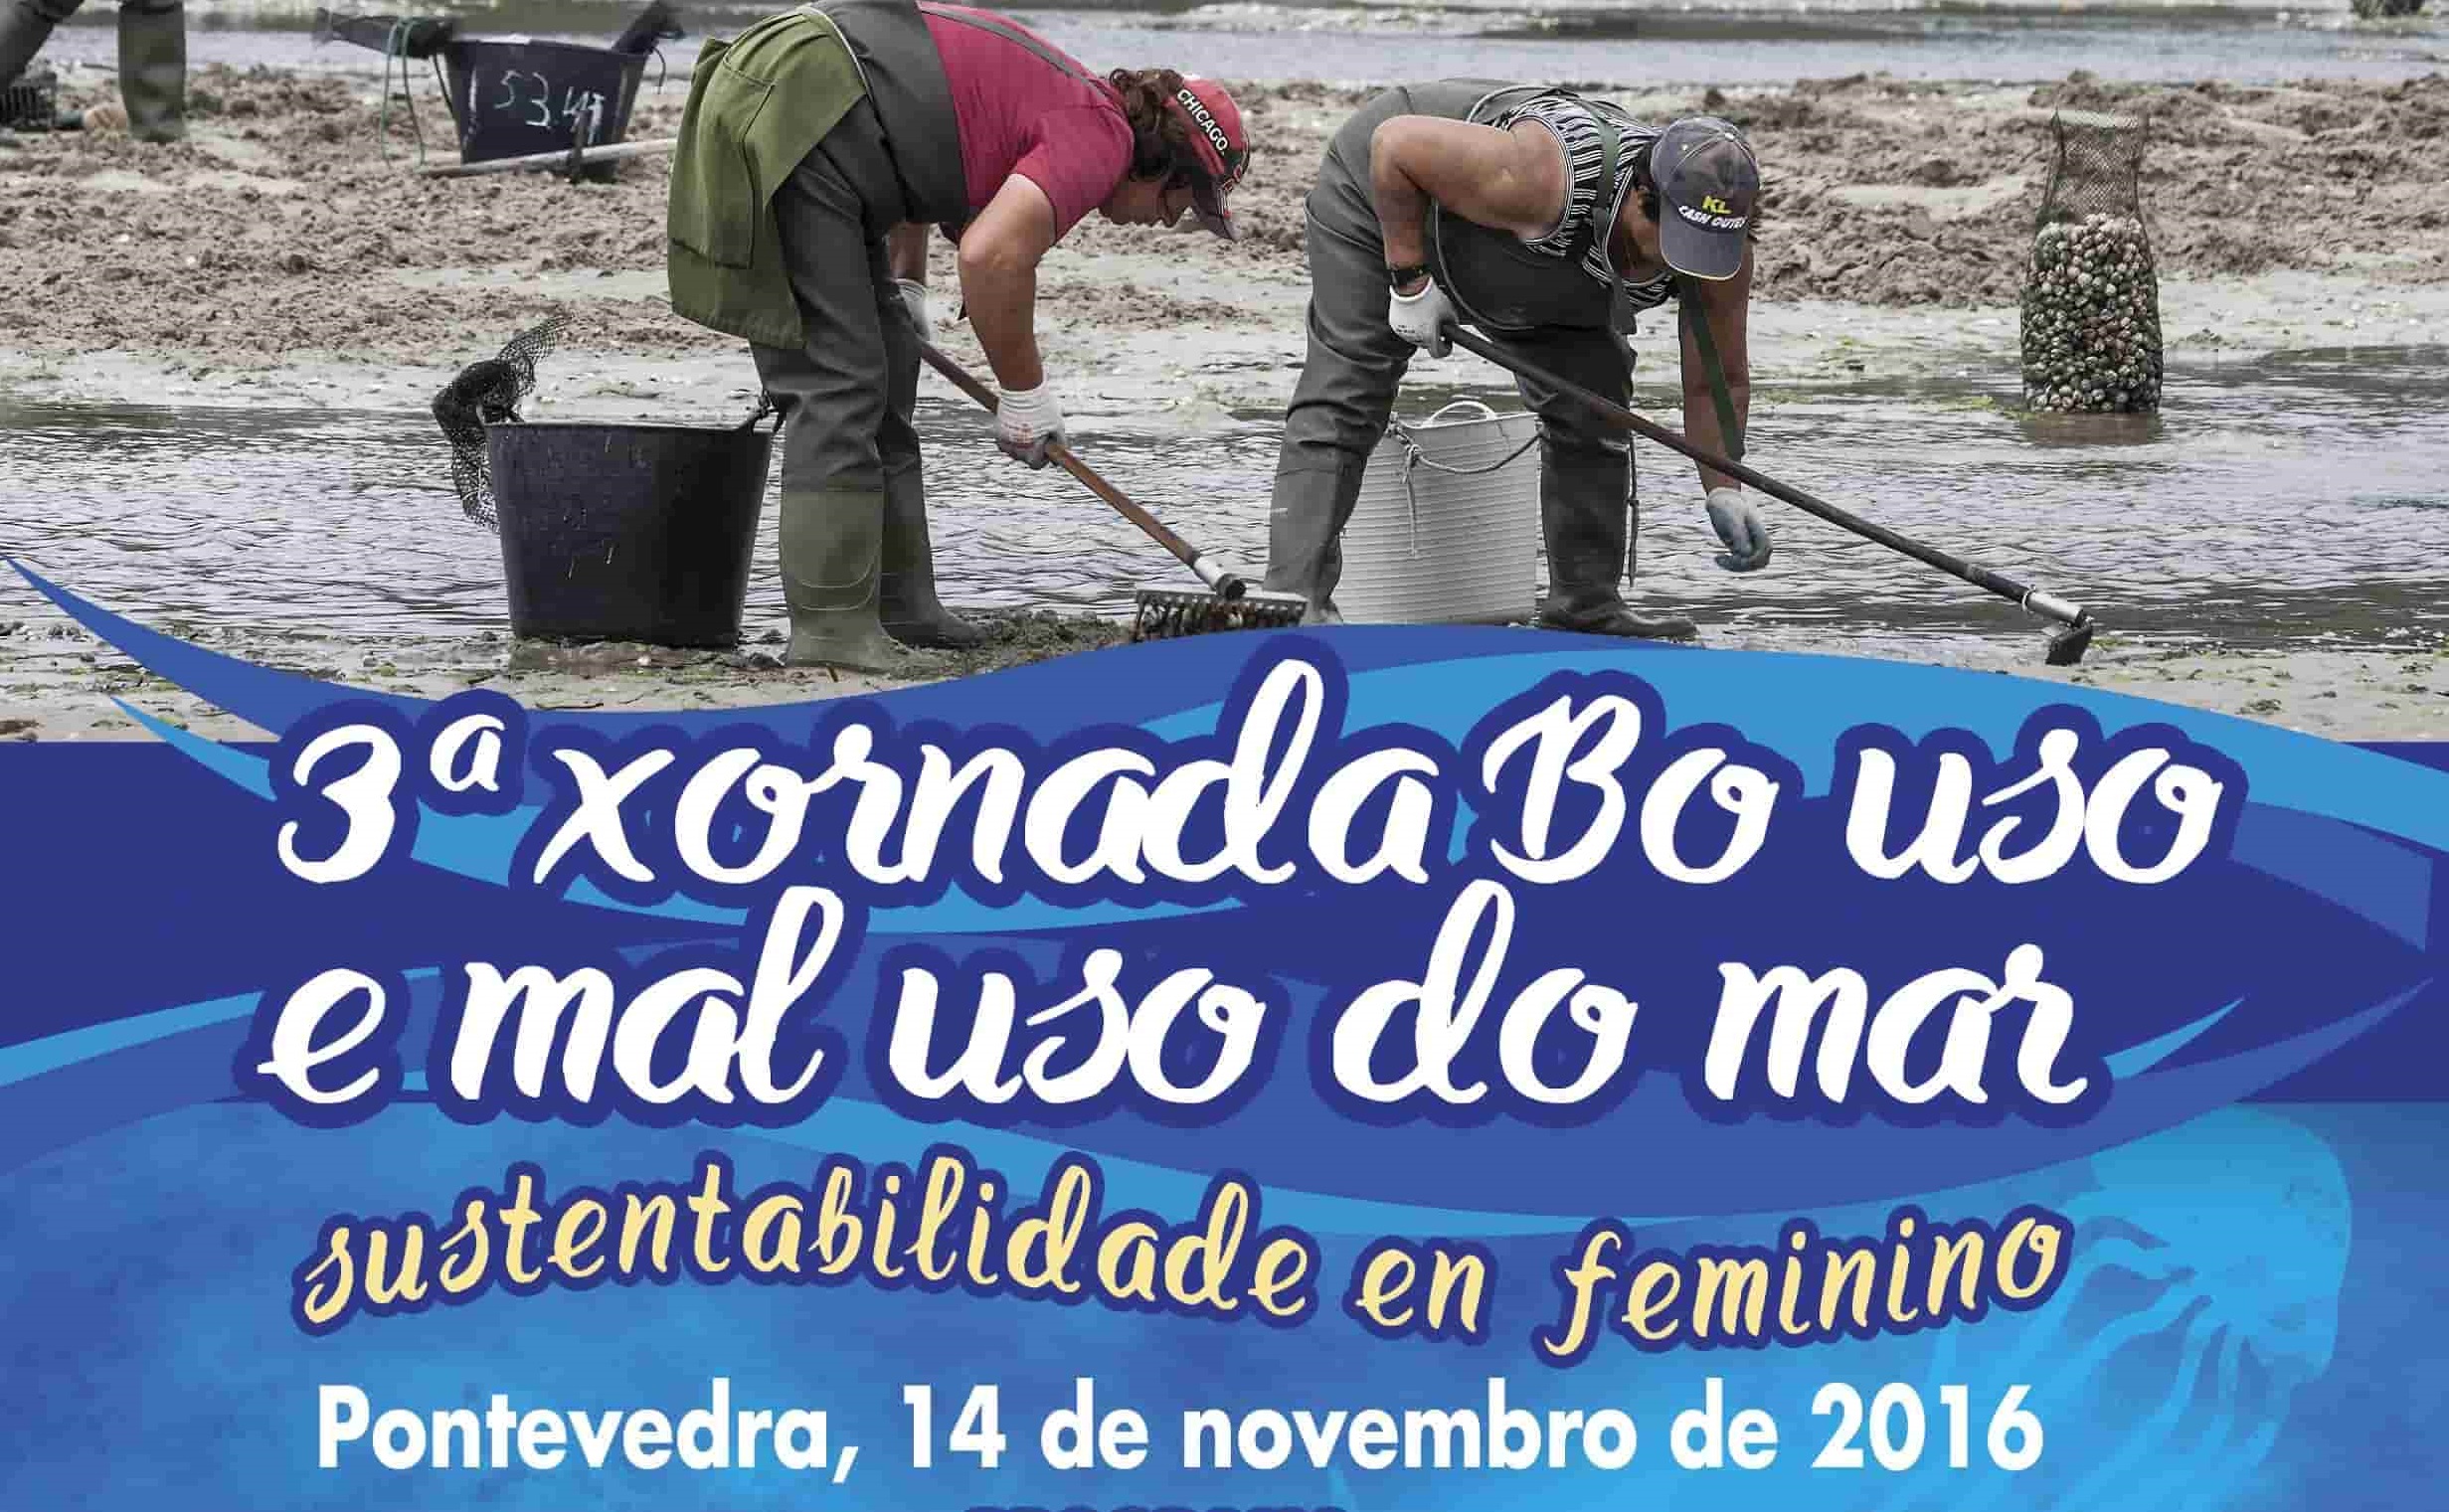 3ª Xornada Bo uso e mal uso do mar. Sustentabilidade en feminino